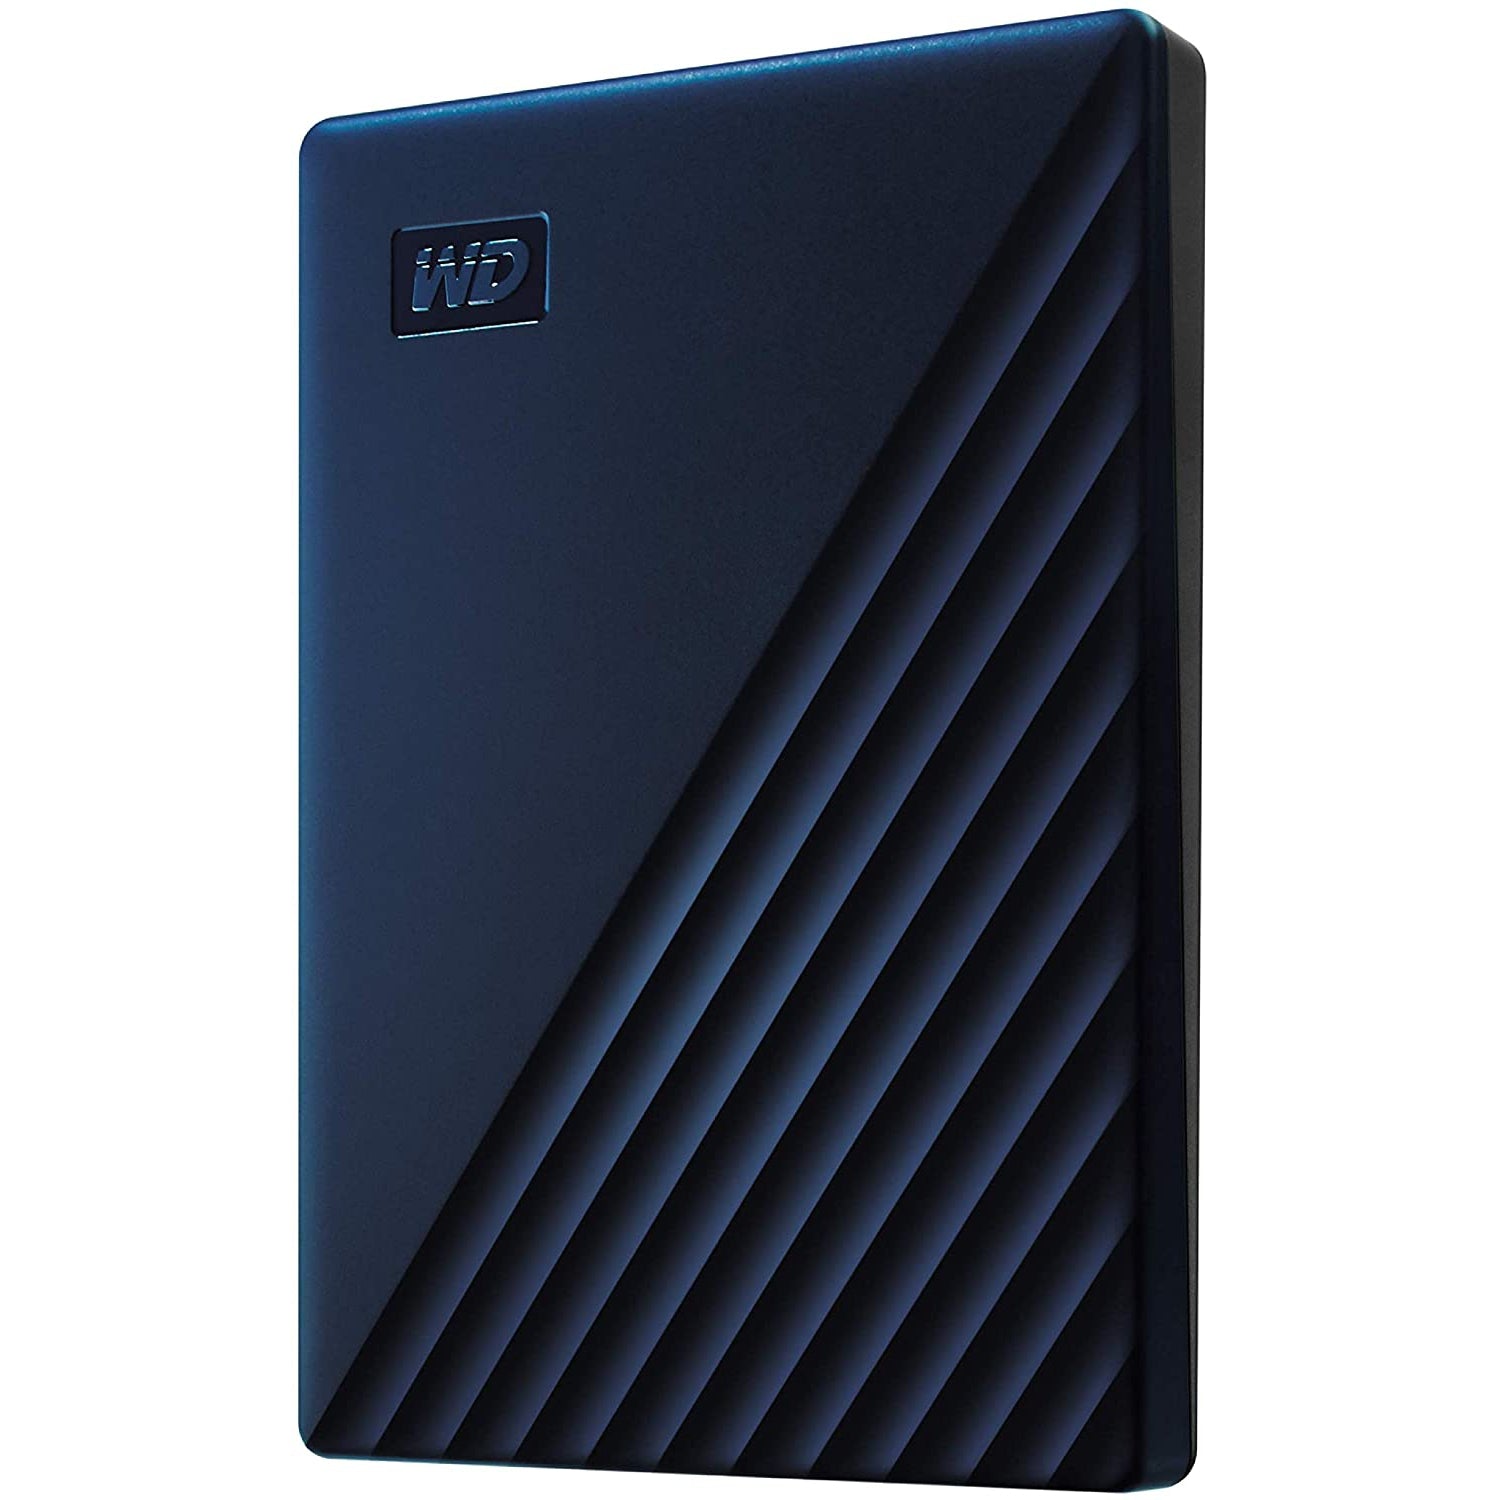 Western Digital My Passport for Mac Portable Hard Drive - 2 TB - Midnight Blue